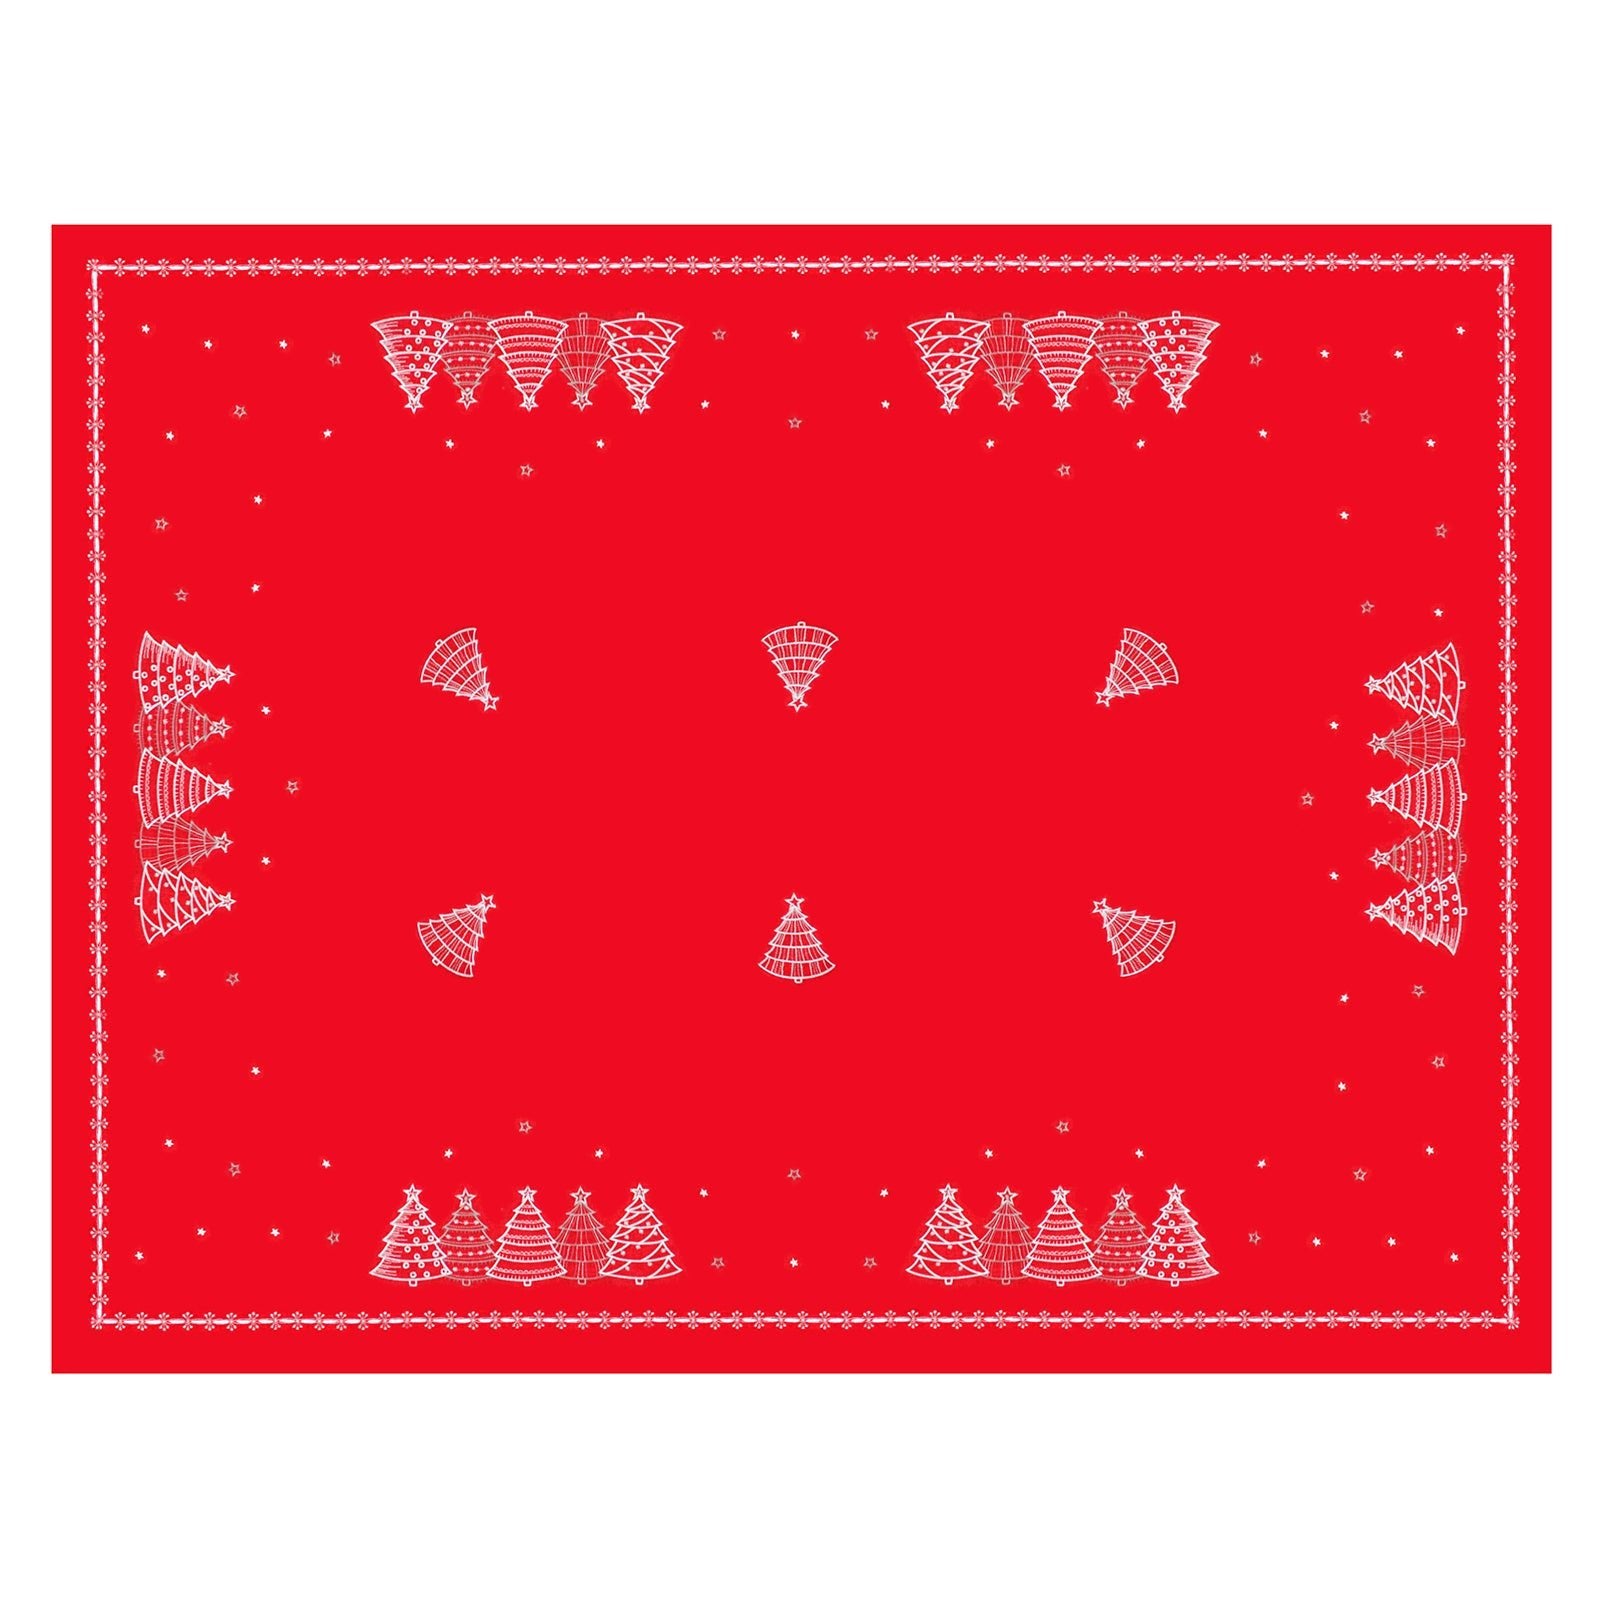 Mr Crimbo Red Christmas Tablecloth Napkins Silver Tree Stars - MrCrimbo.co.uk -XS6568 - 52 x 70" -christmas napkins